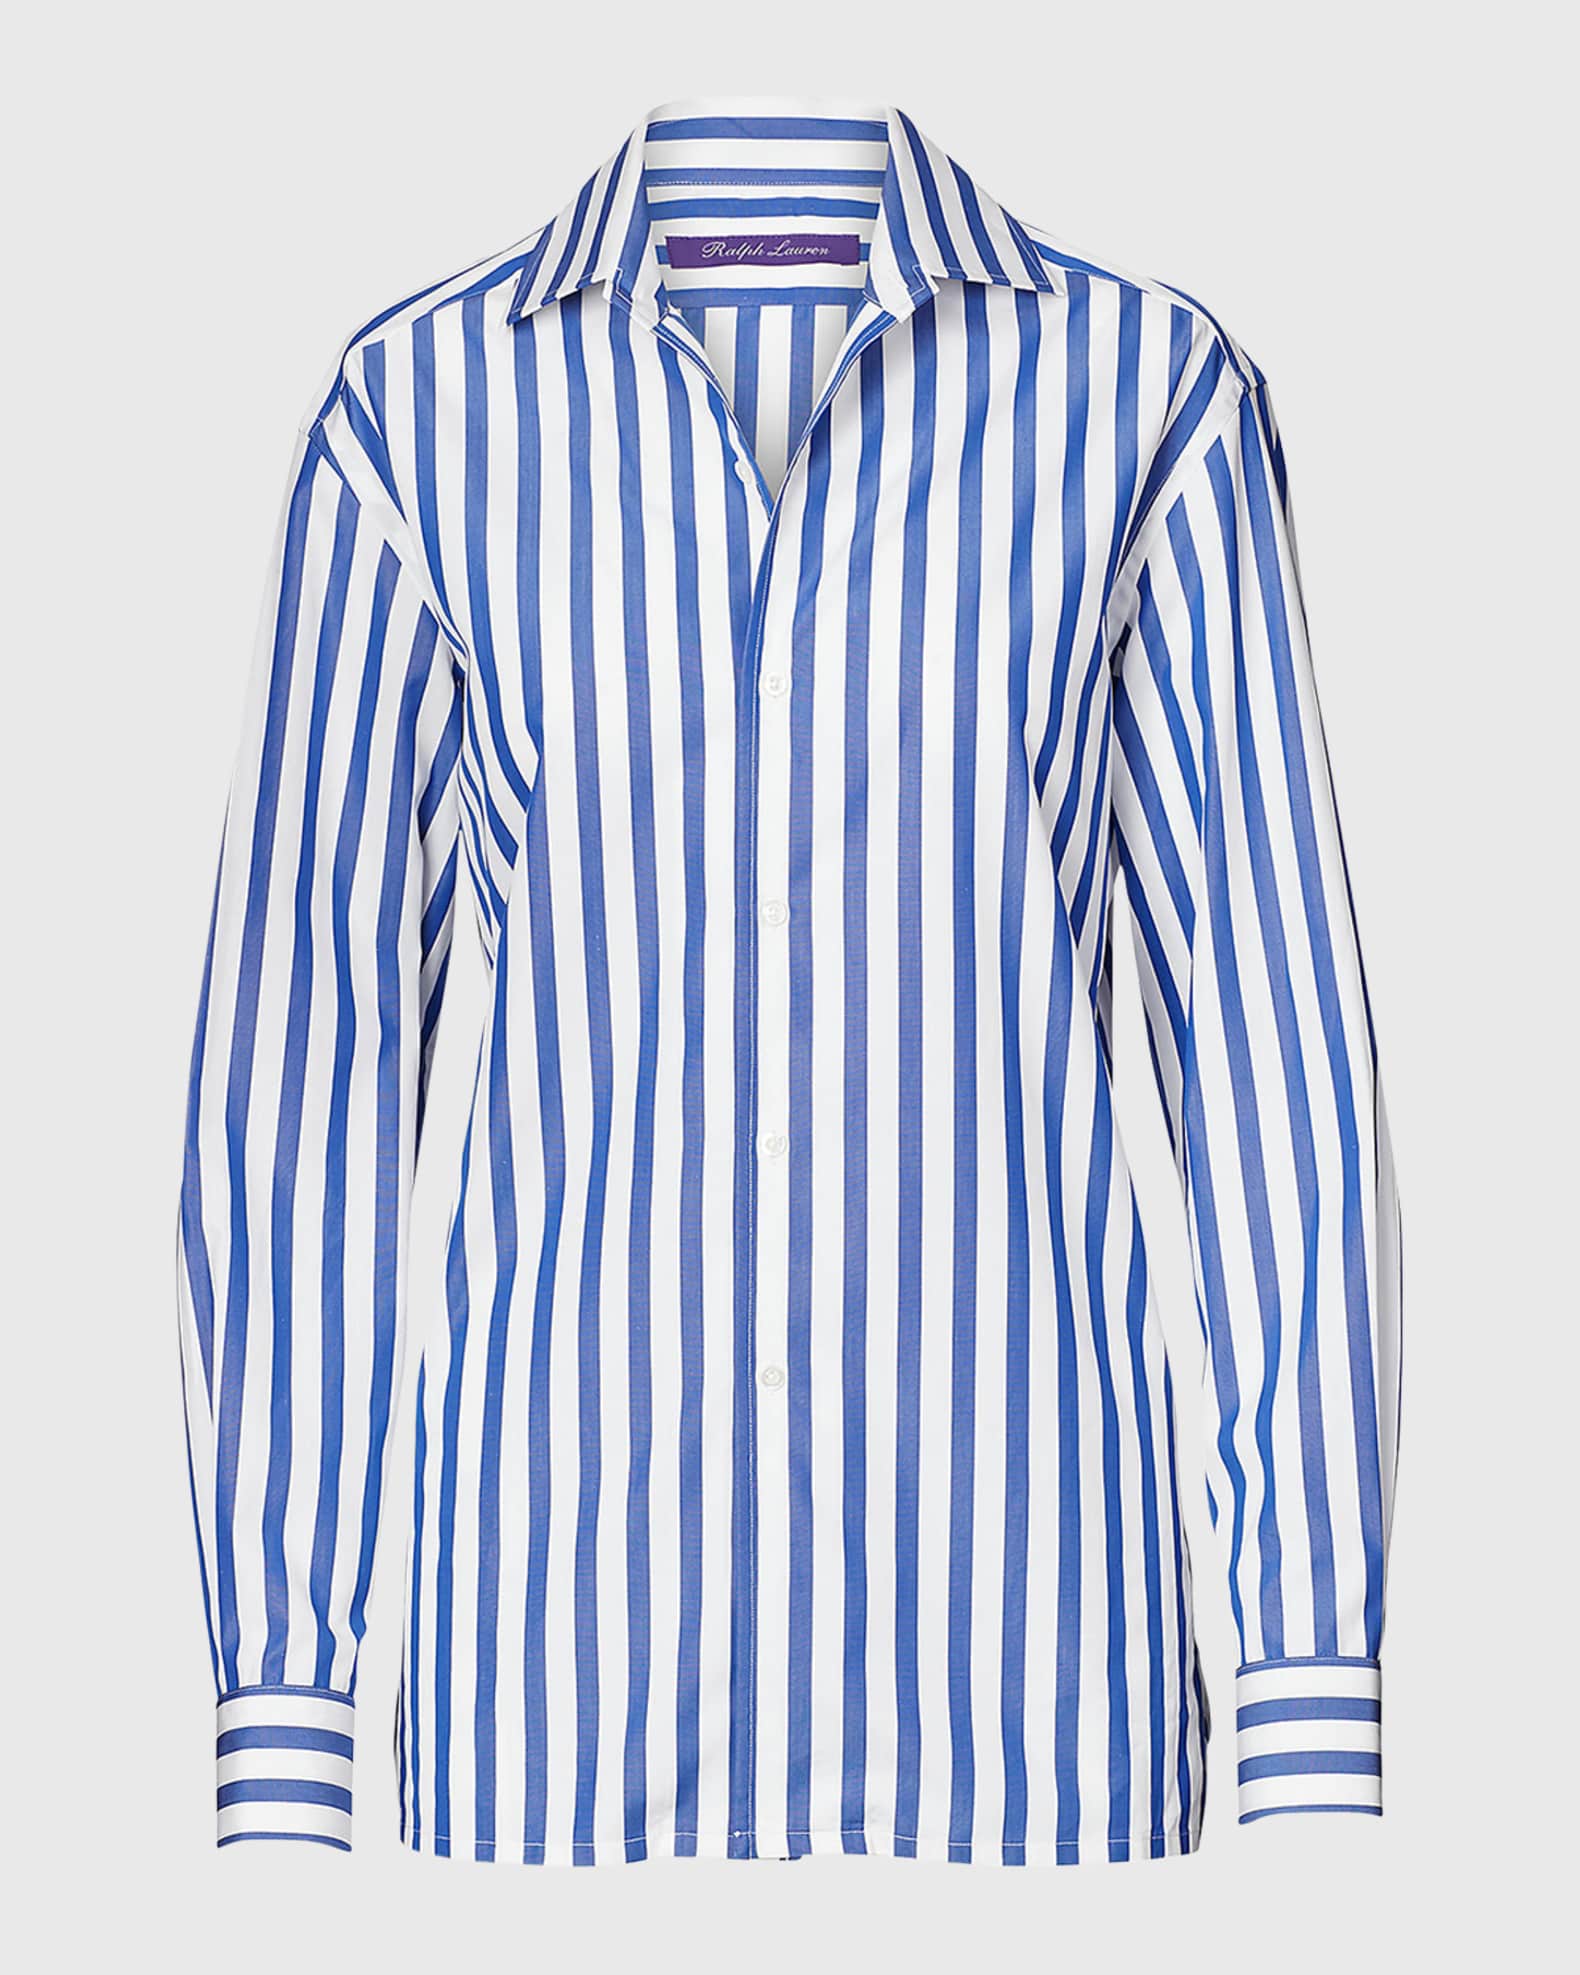 Ralph Lauren Collection Women's Capri Striped Cotton Shirt